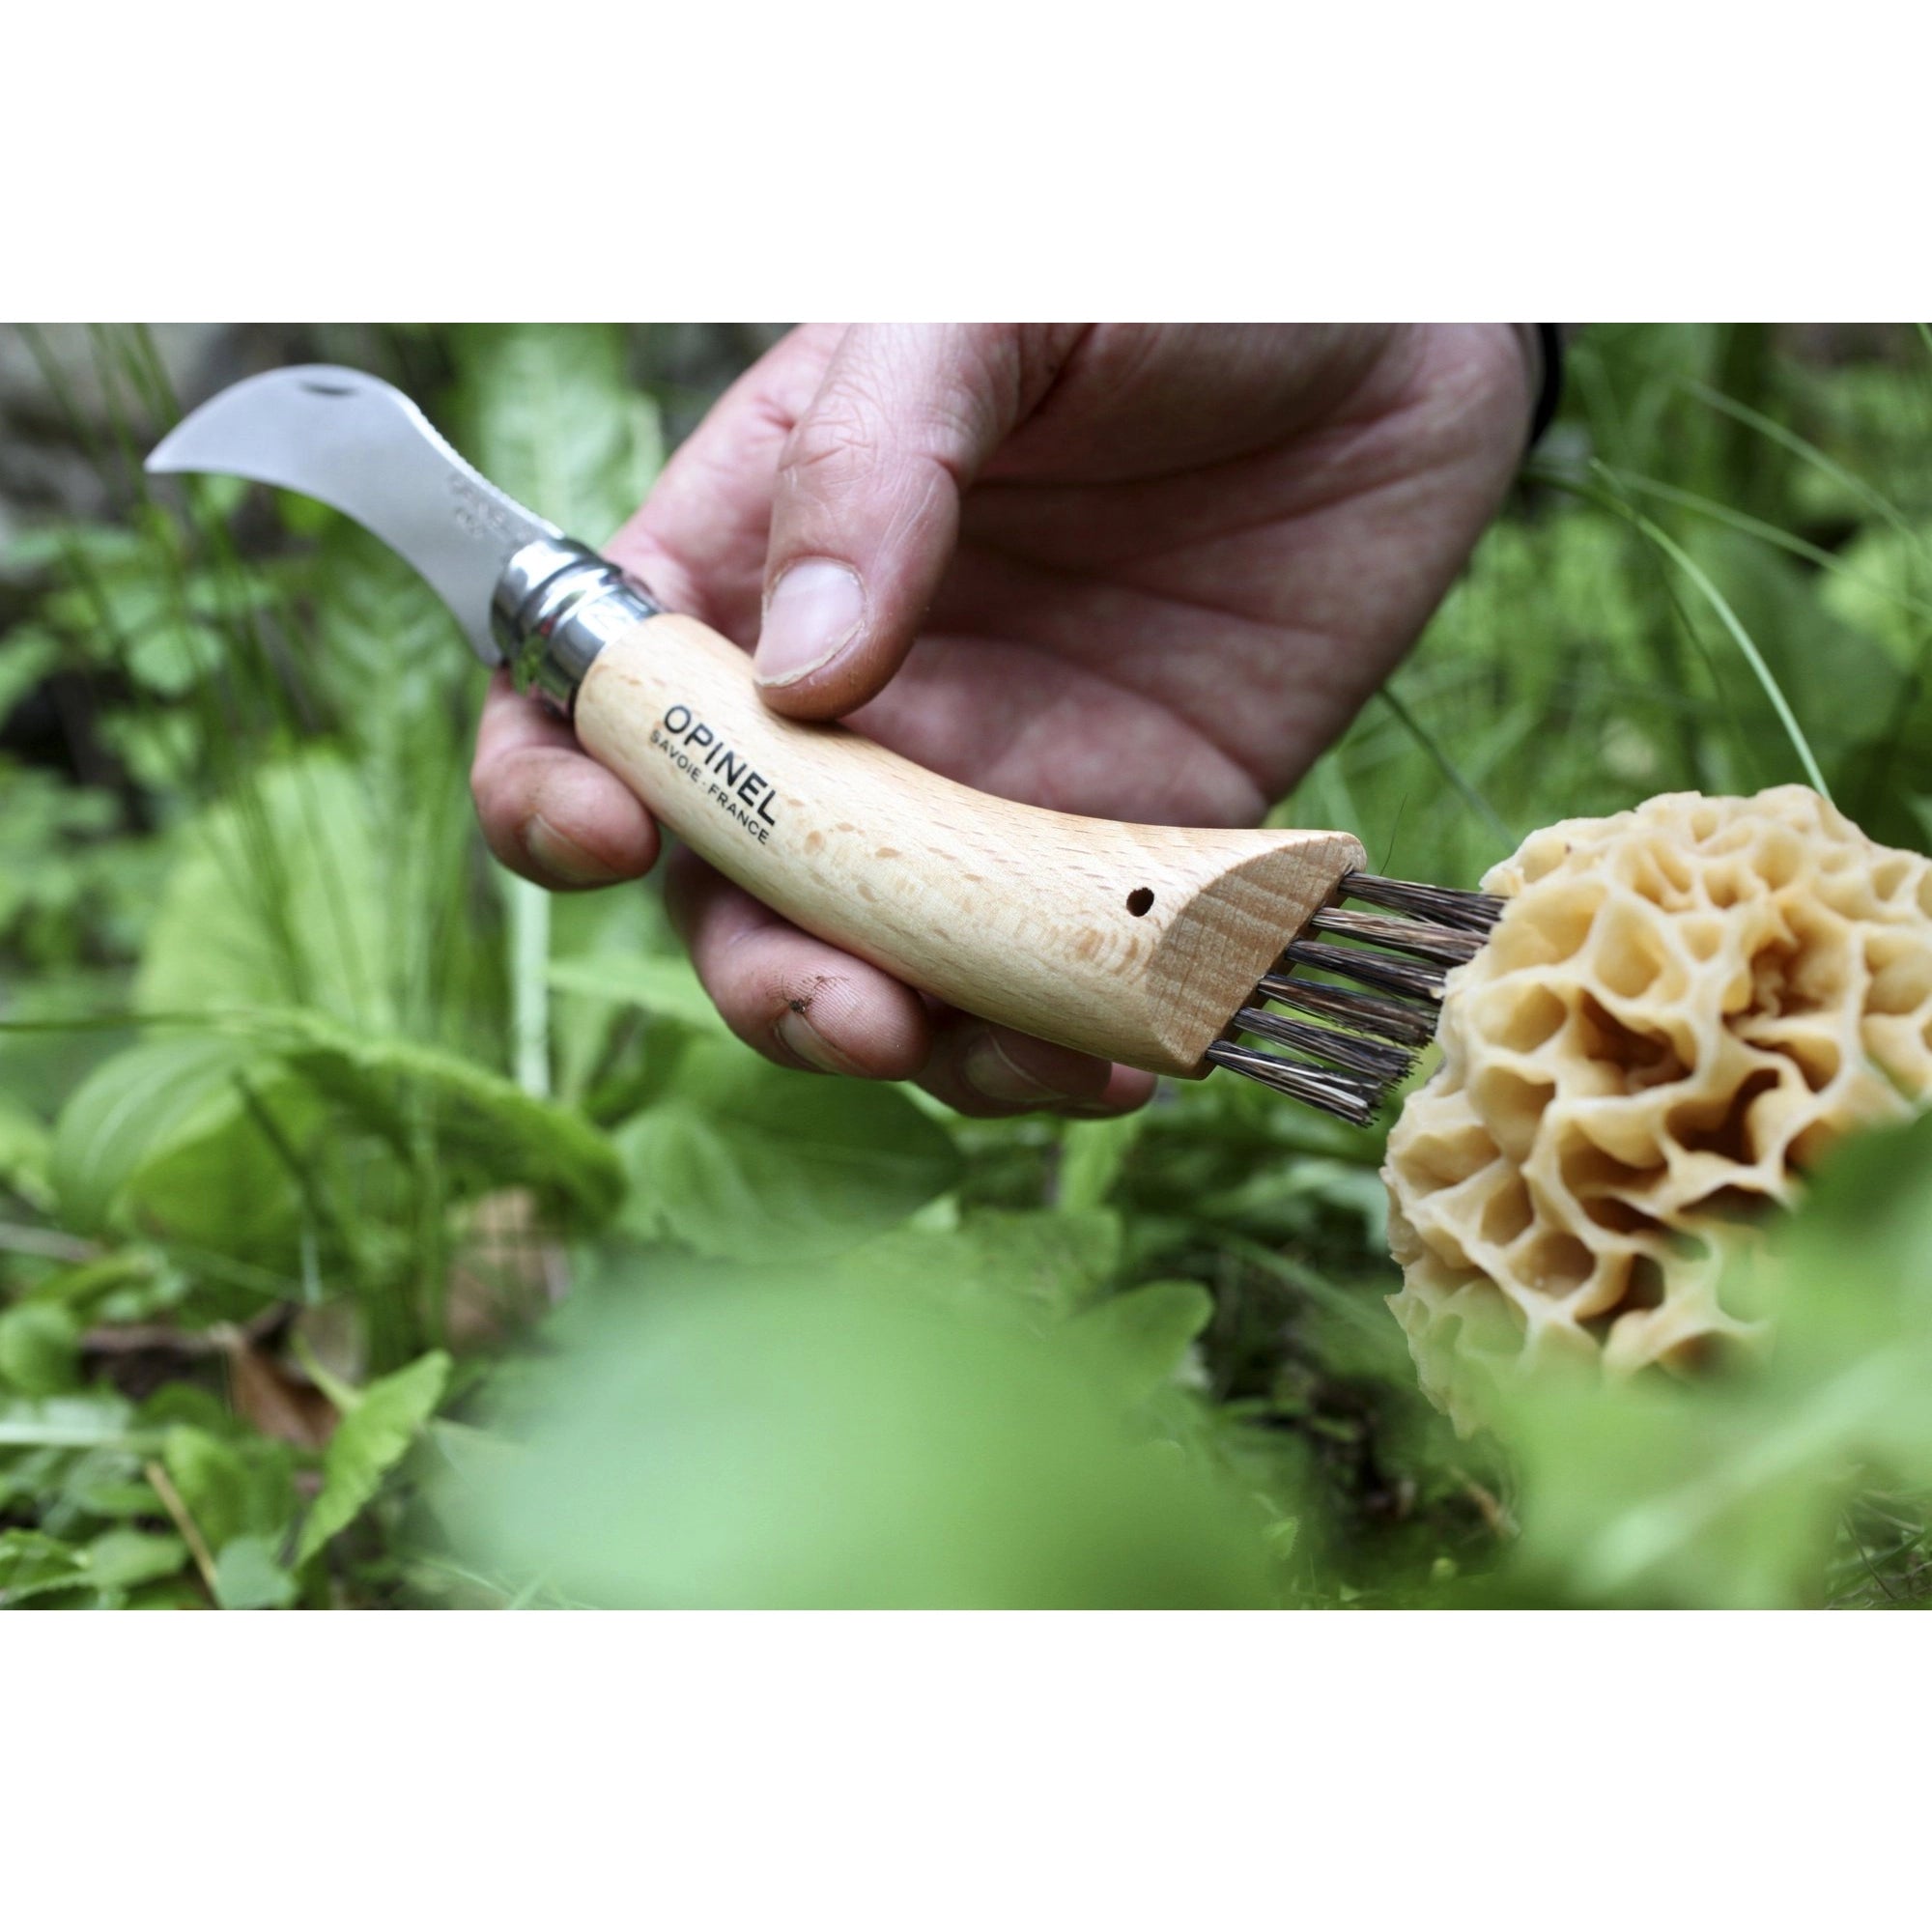 N°8 Mushroom Knife with Brush